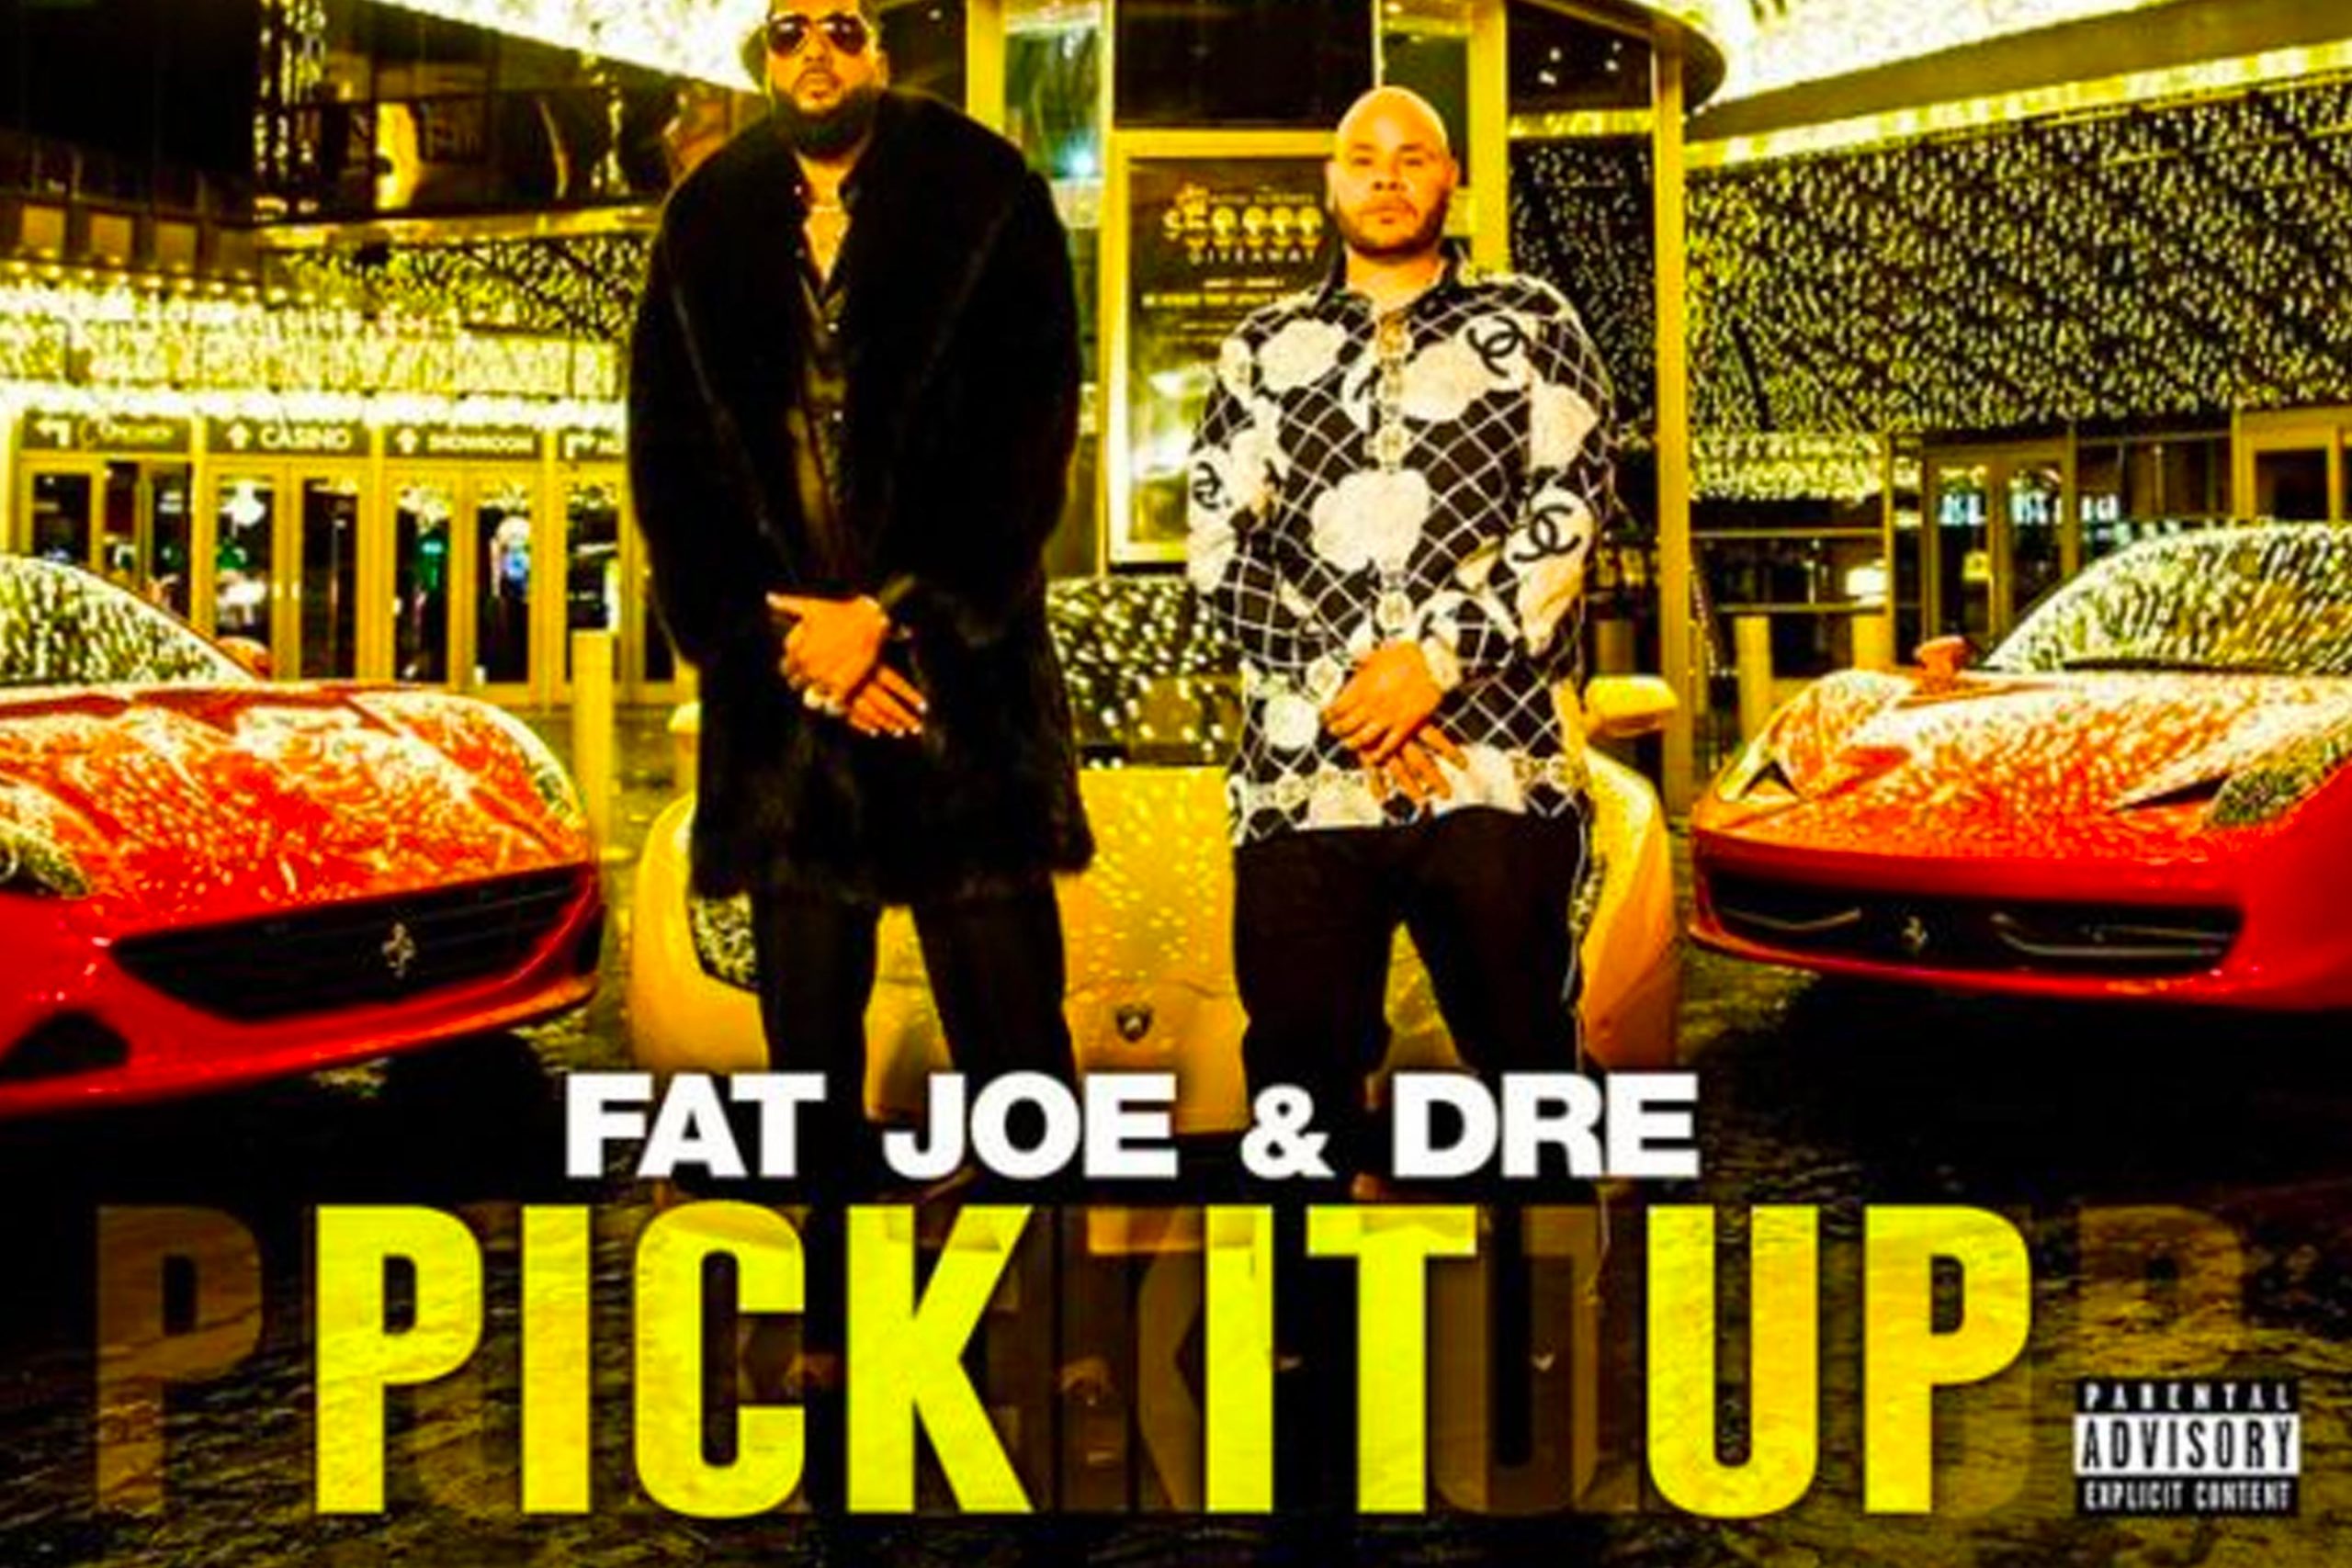 Fat Joe and Dre Pick it up album cover